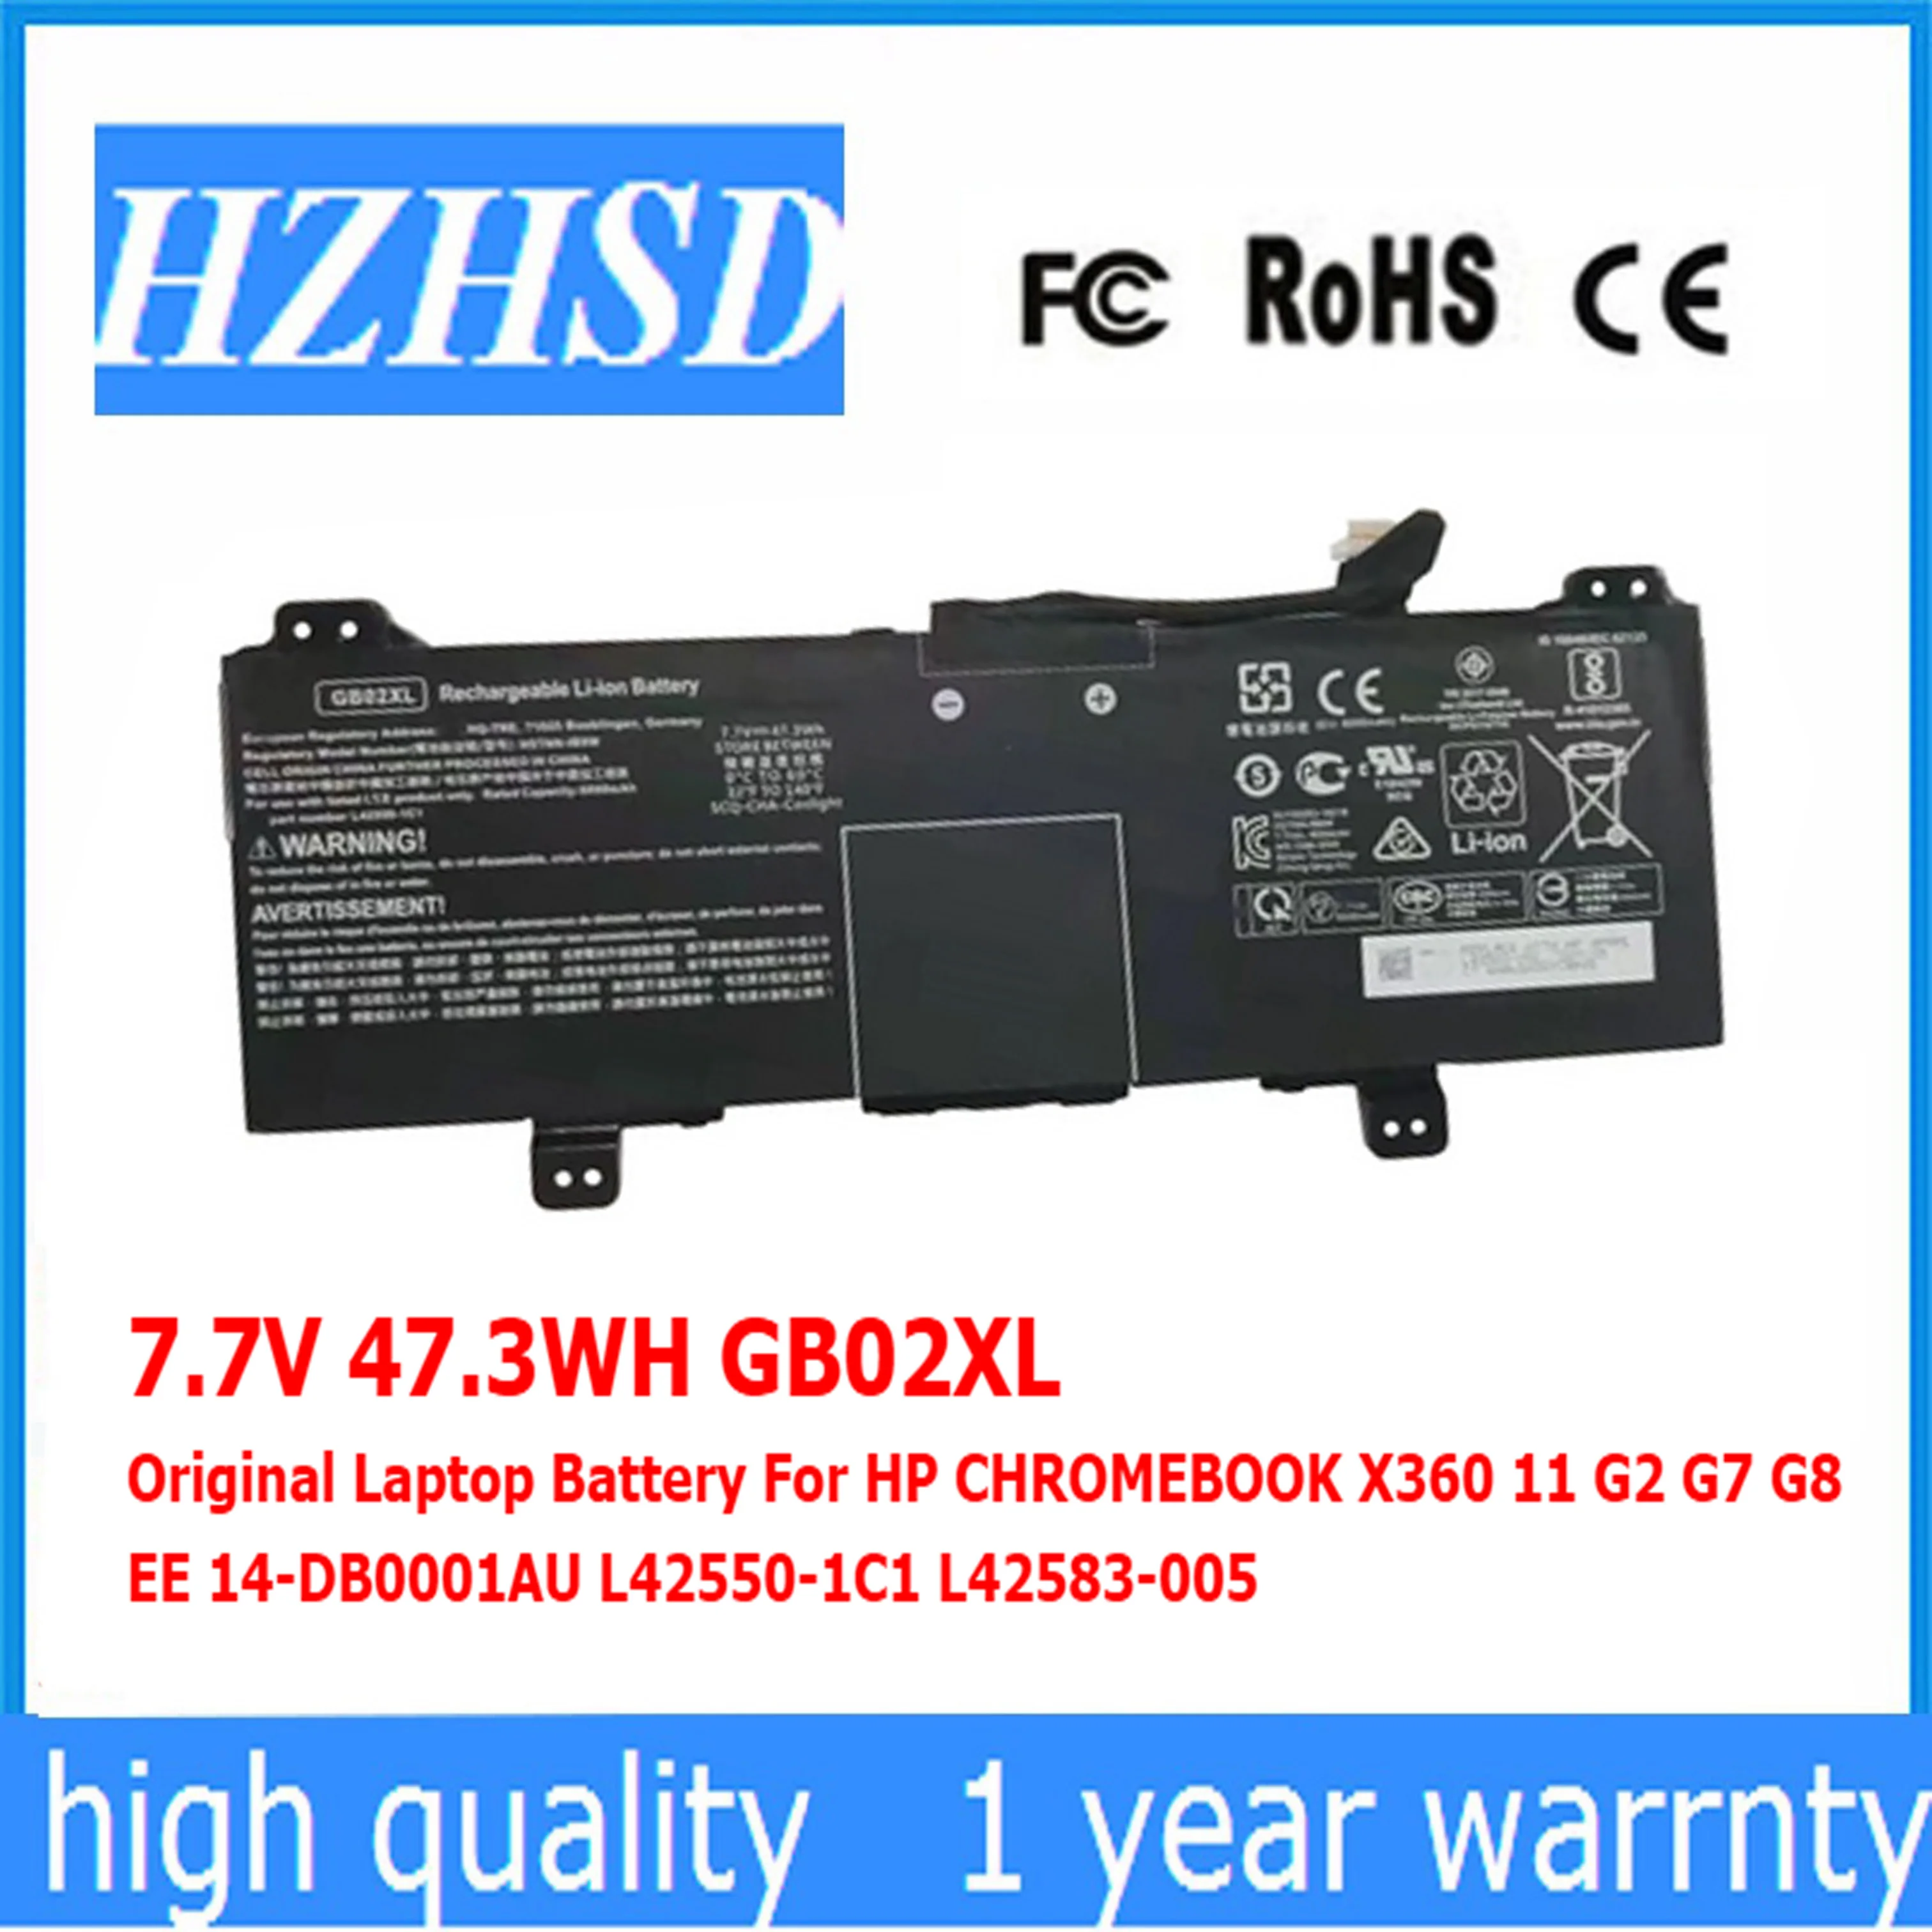 

7.7V 47.3WH GB02XL Original Laptop Battery For HP CHROMEBOOK X360 11 G2 G7 G8 EE 14-DB0001AU L42550-1C1 L42583-005